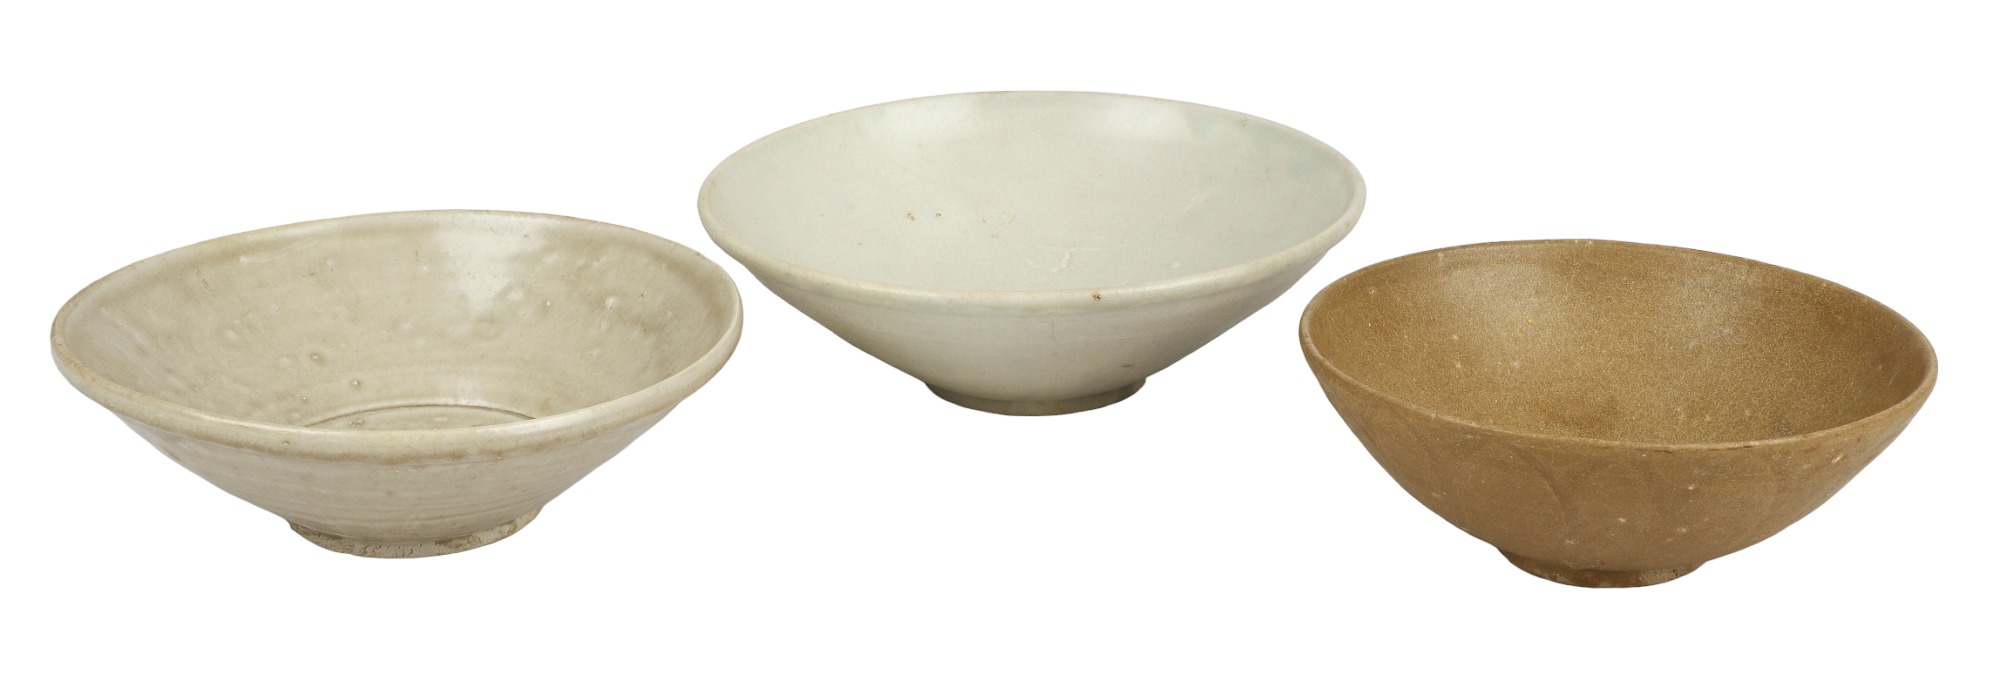 (3) Chinese stoneware bowls, unmarked,